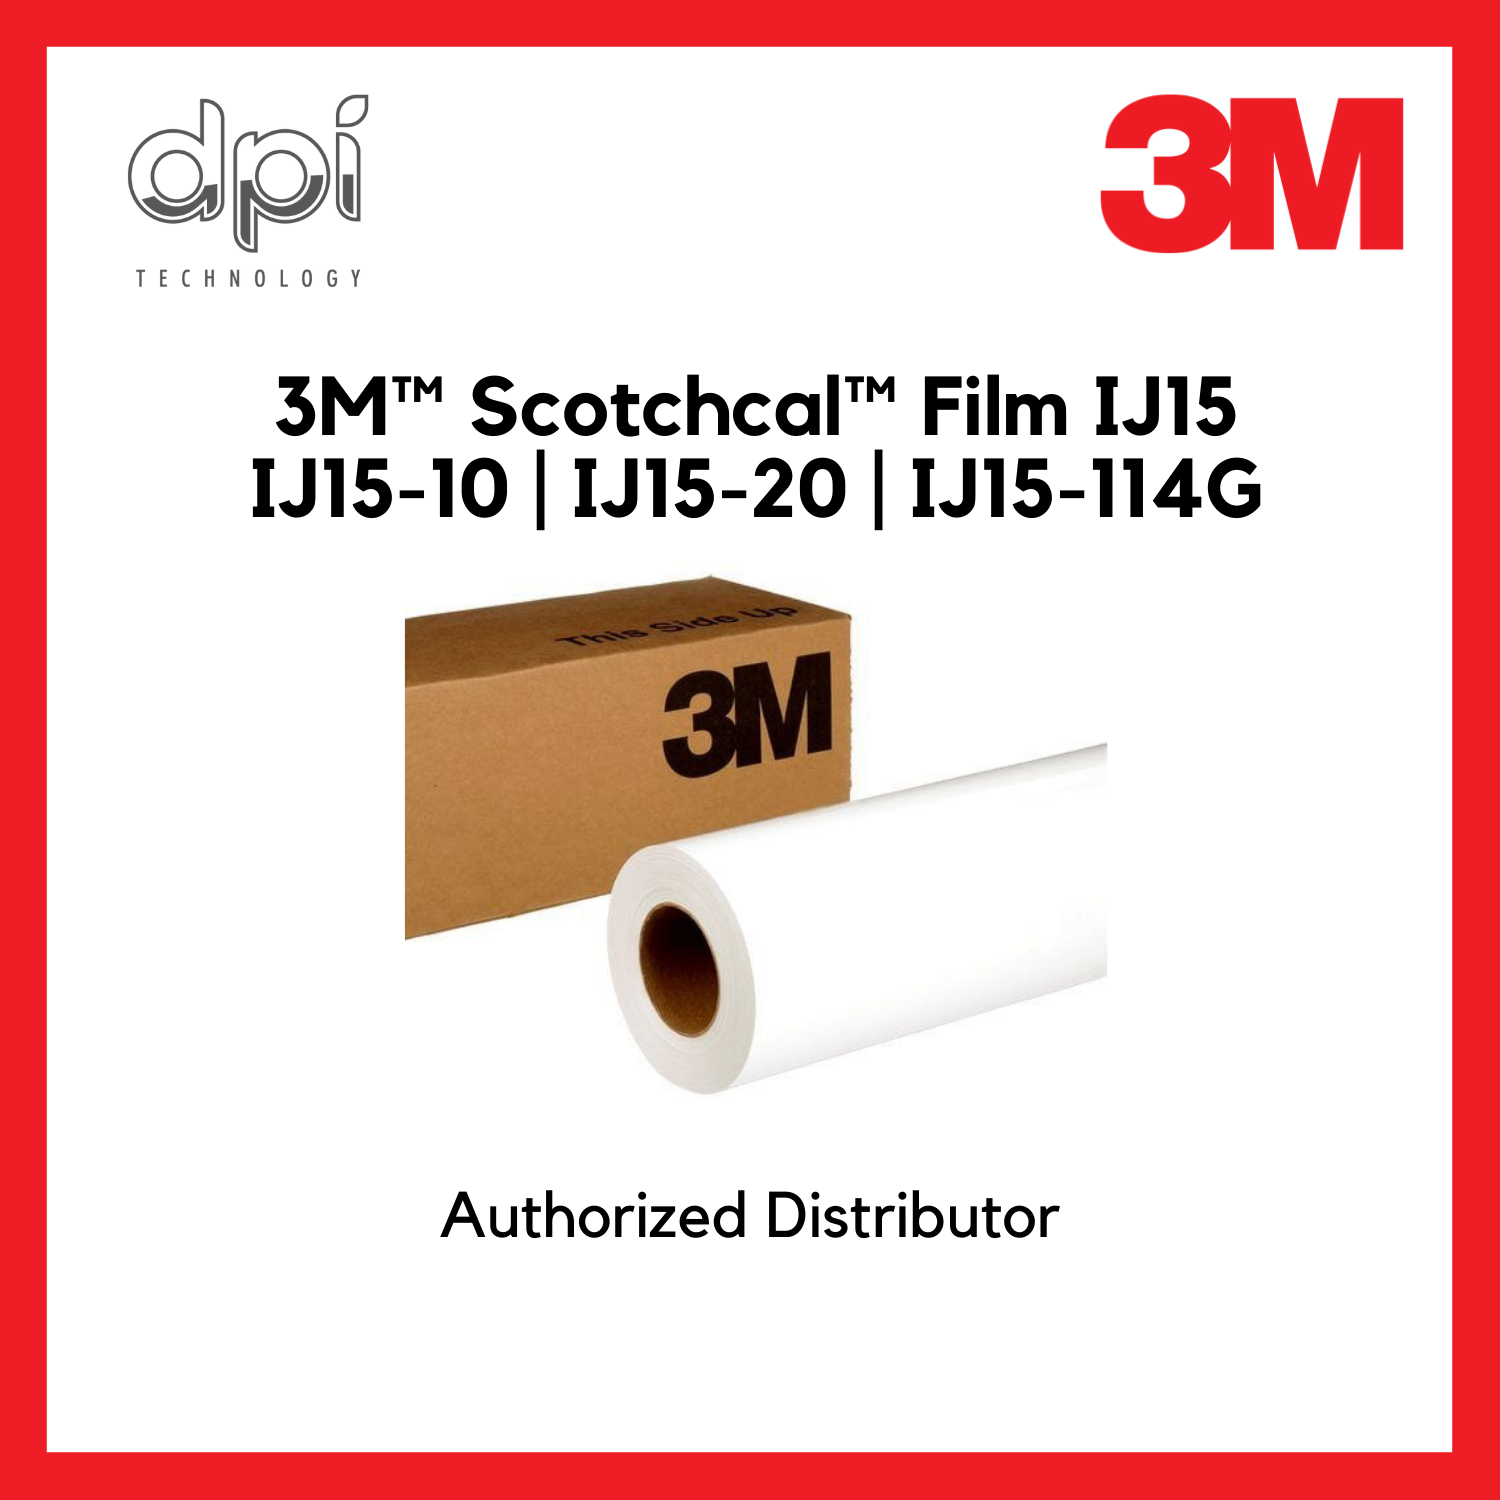 3M Scotchcal Film IJ15